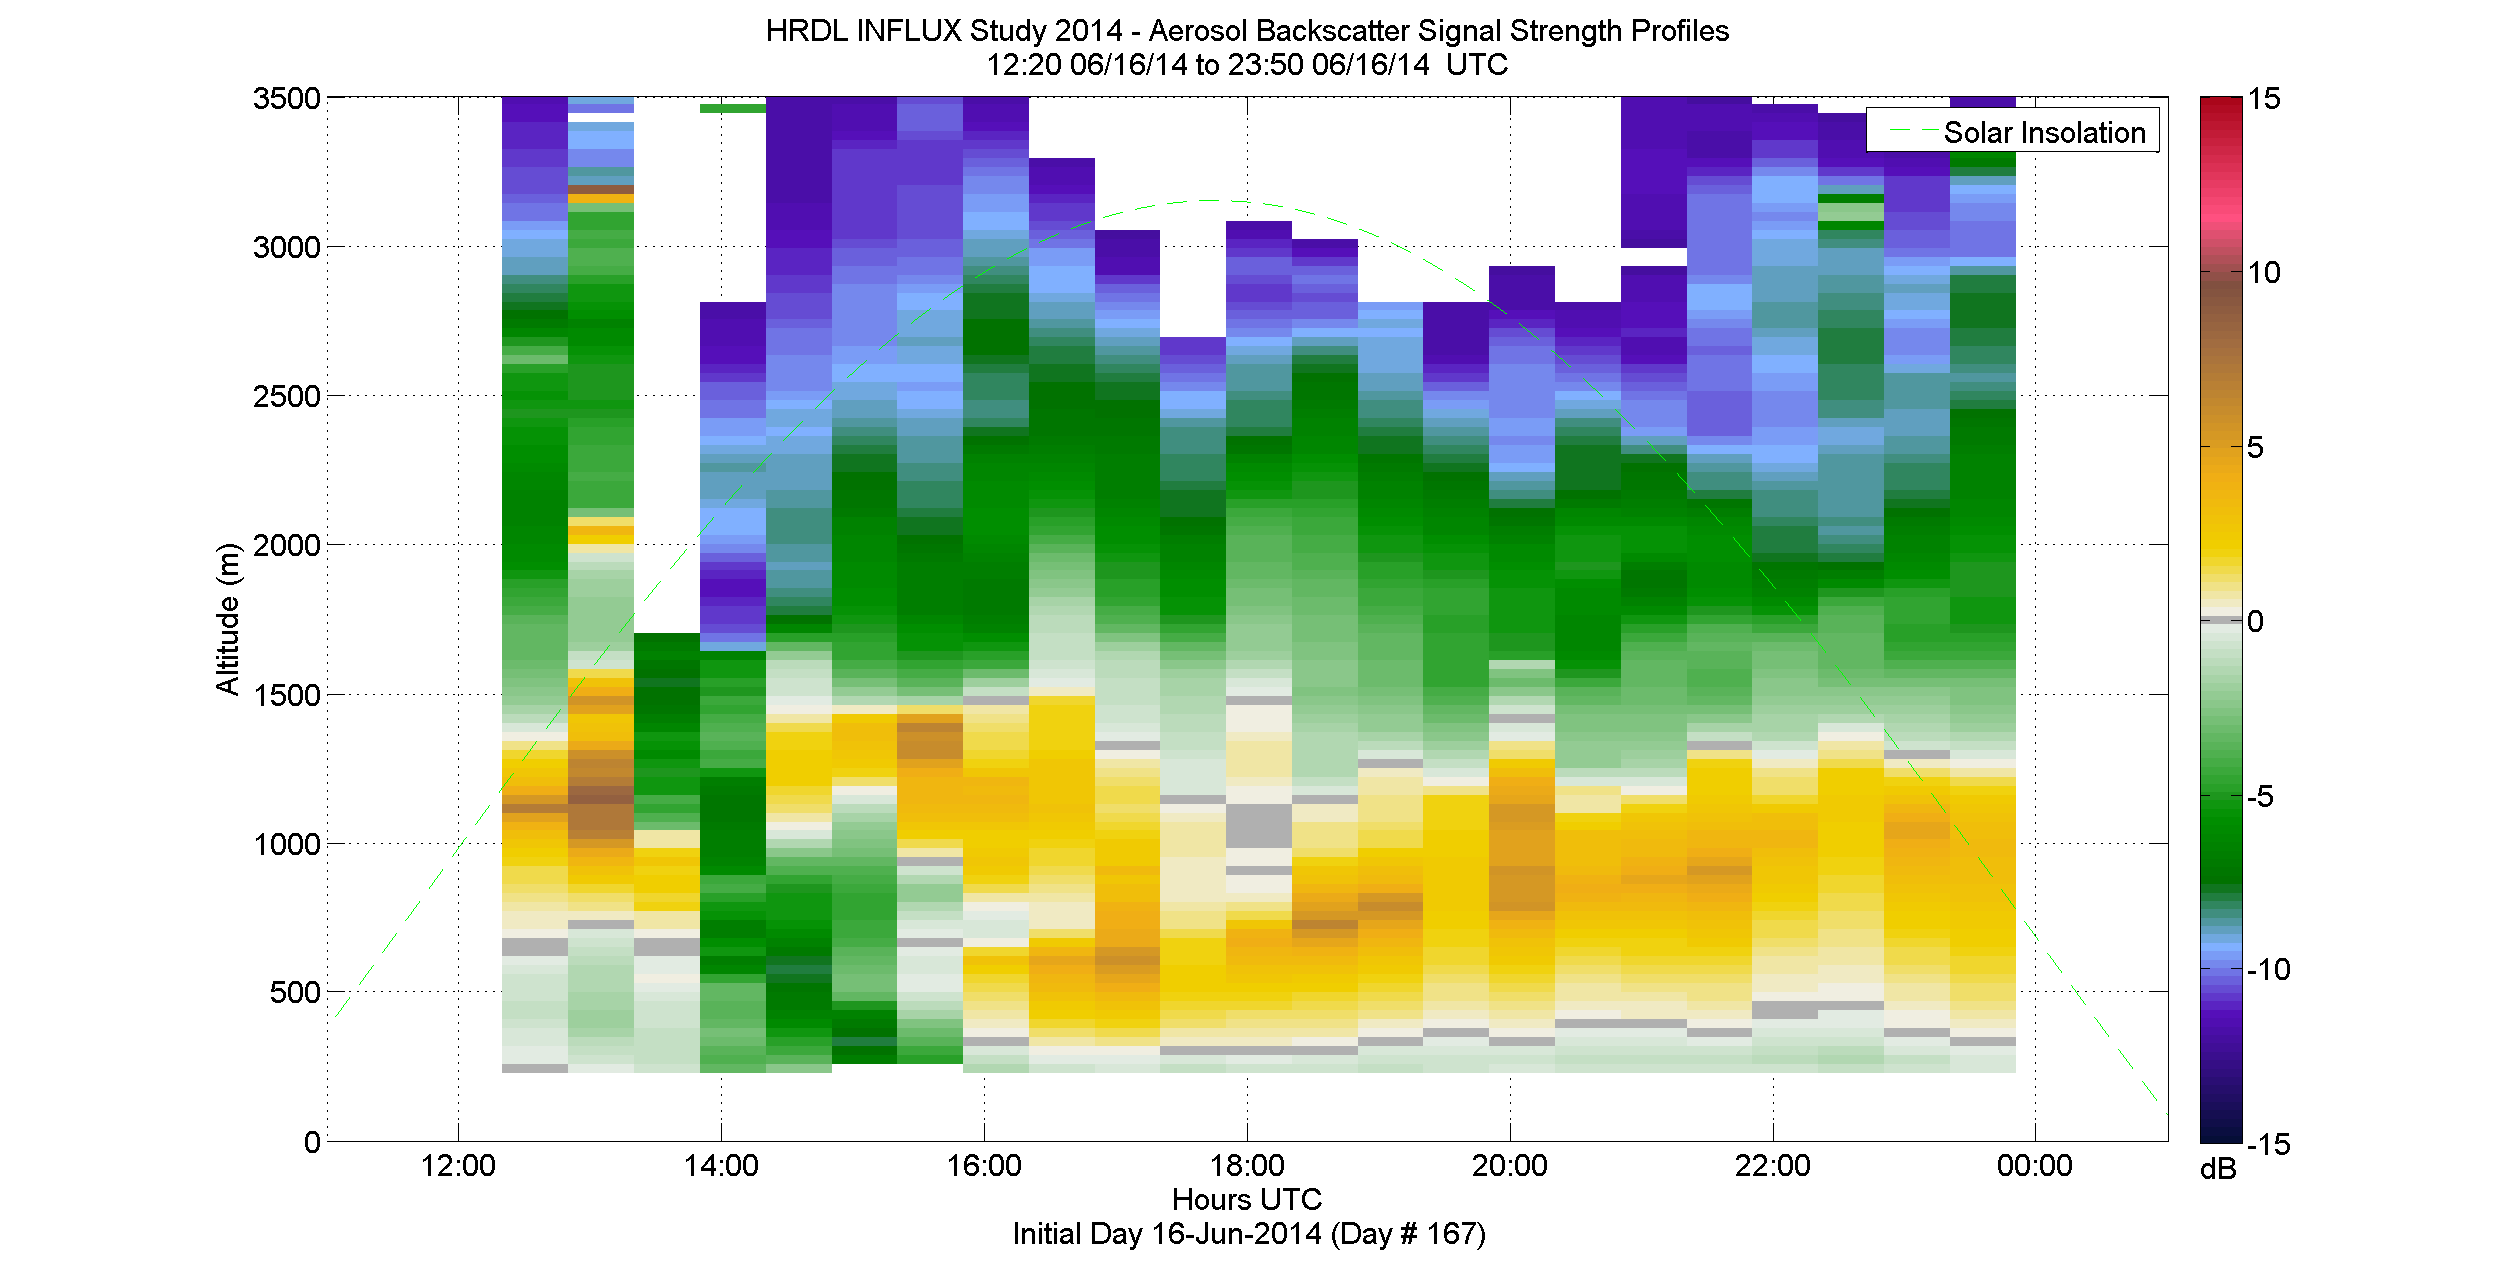 HRDL aerosol backscatter signal strength profile - June 16 pm